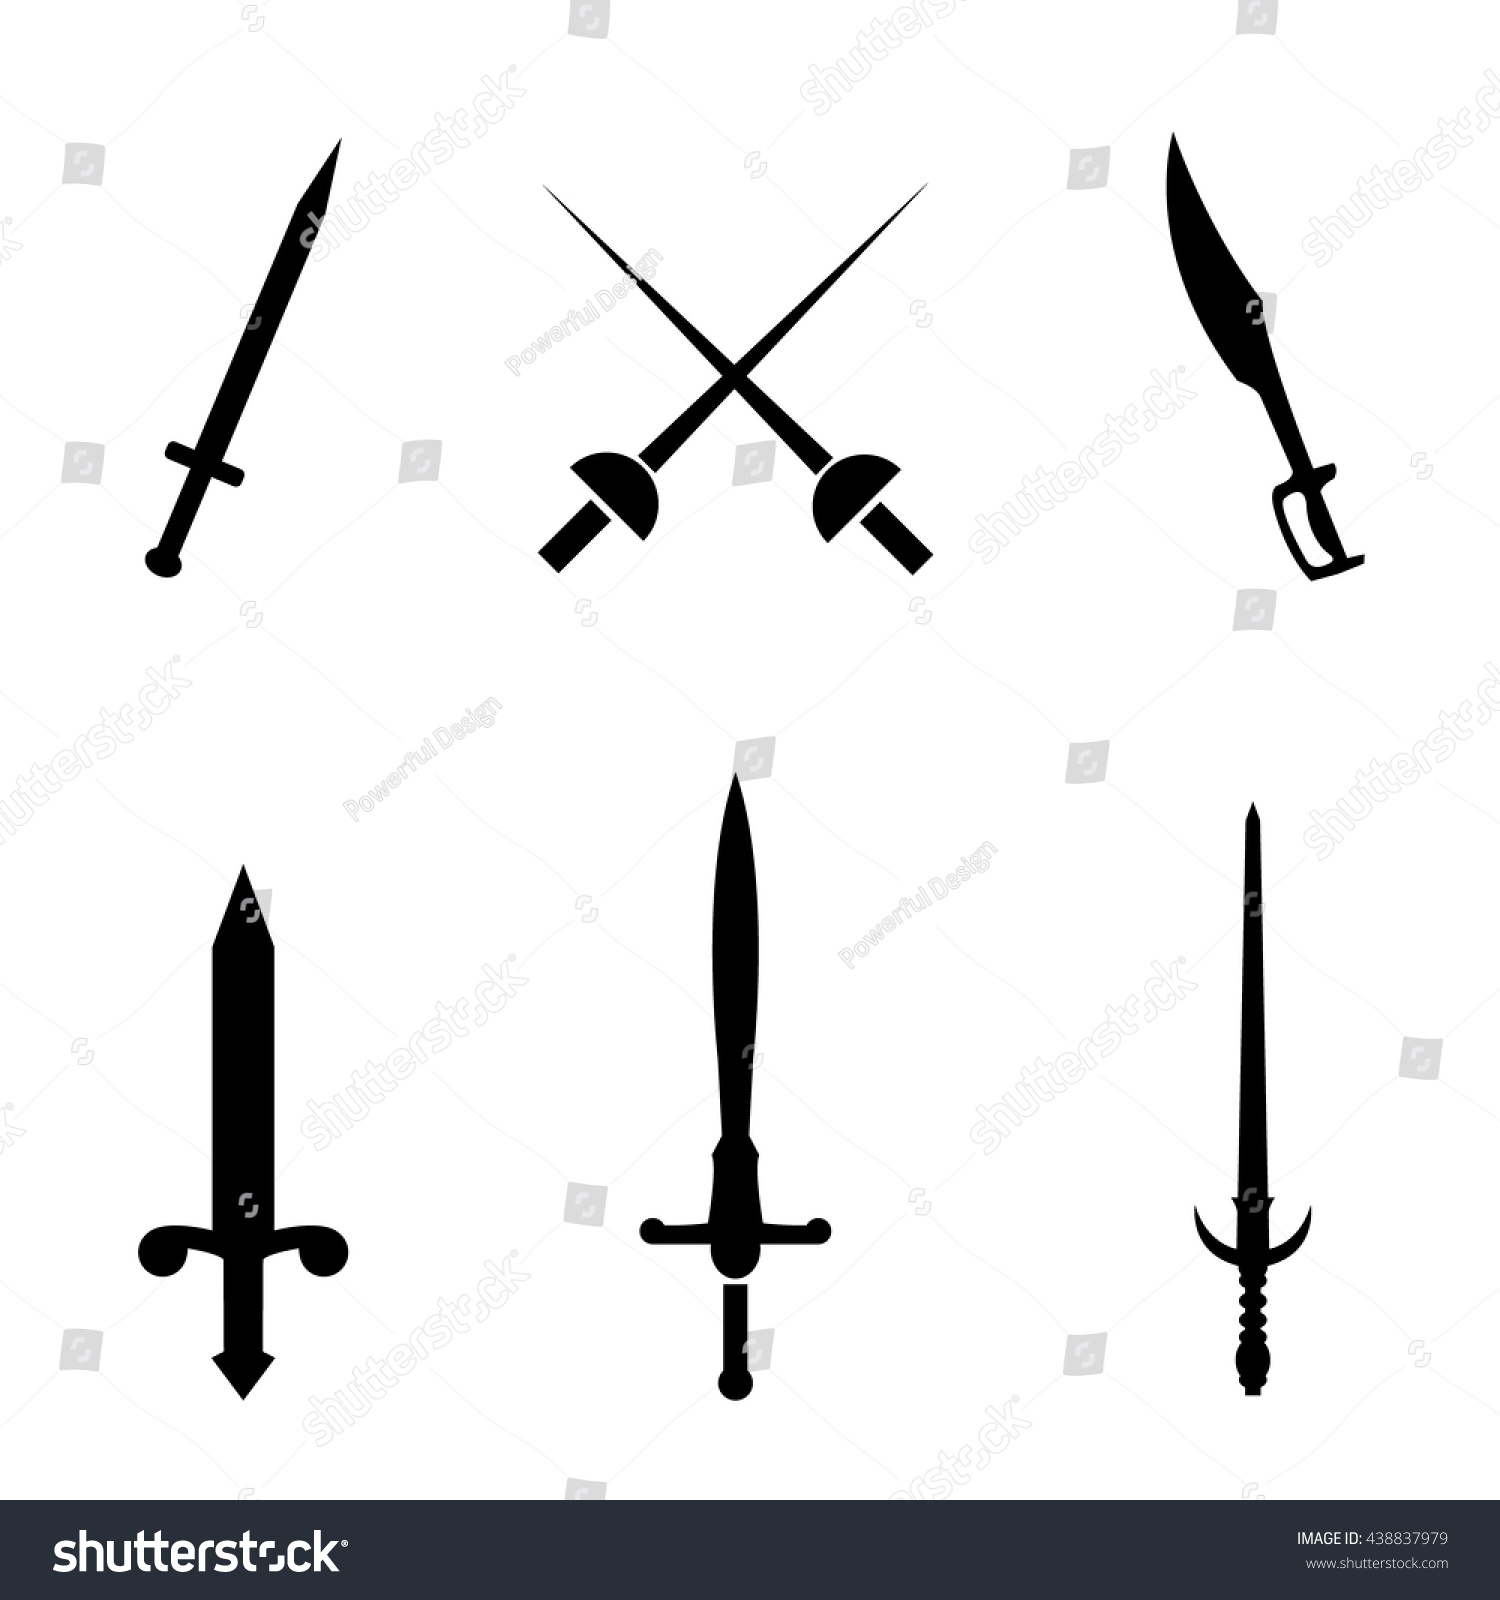 Swords Set Stock Vector Illustration 438837979 : Shutterstock